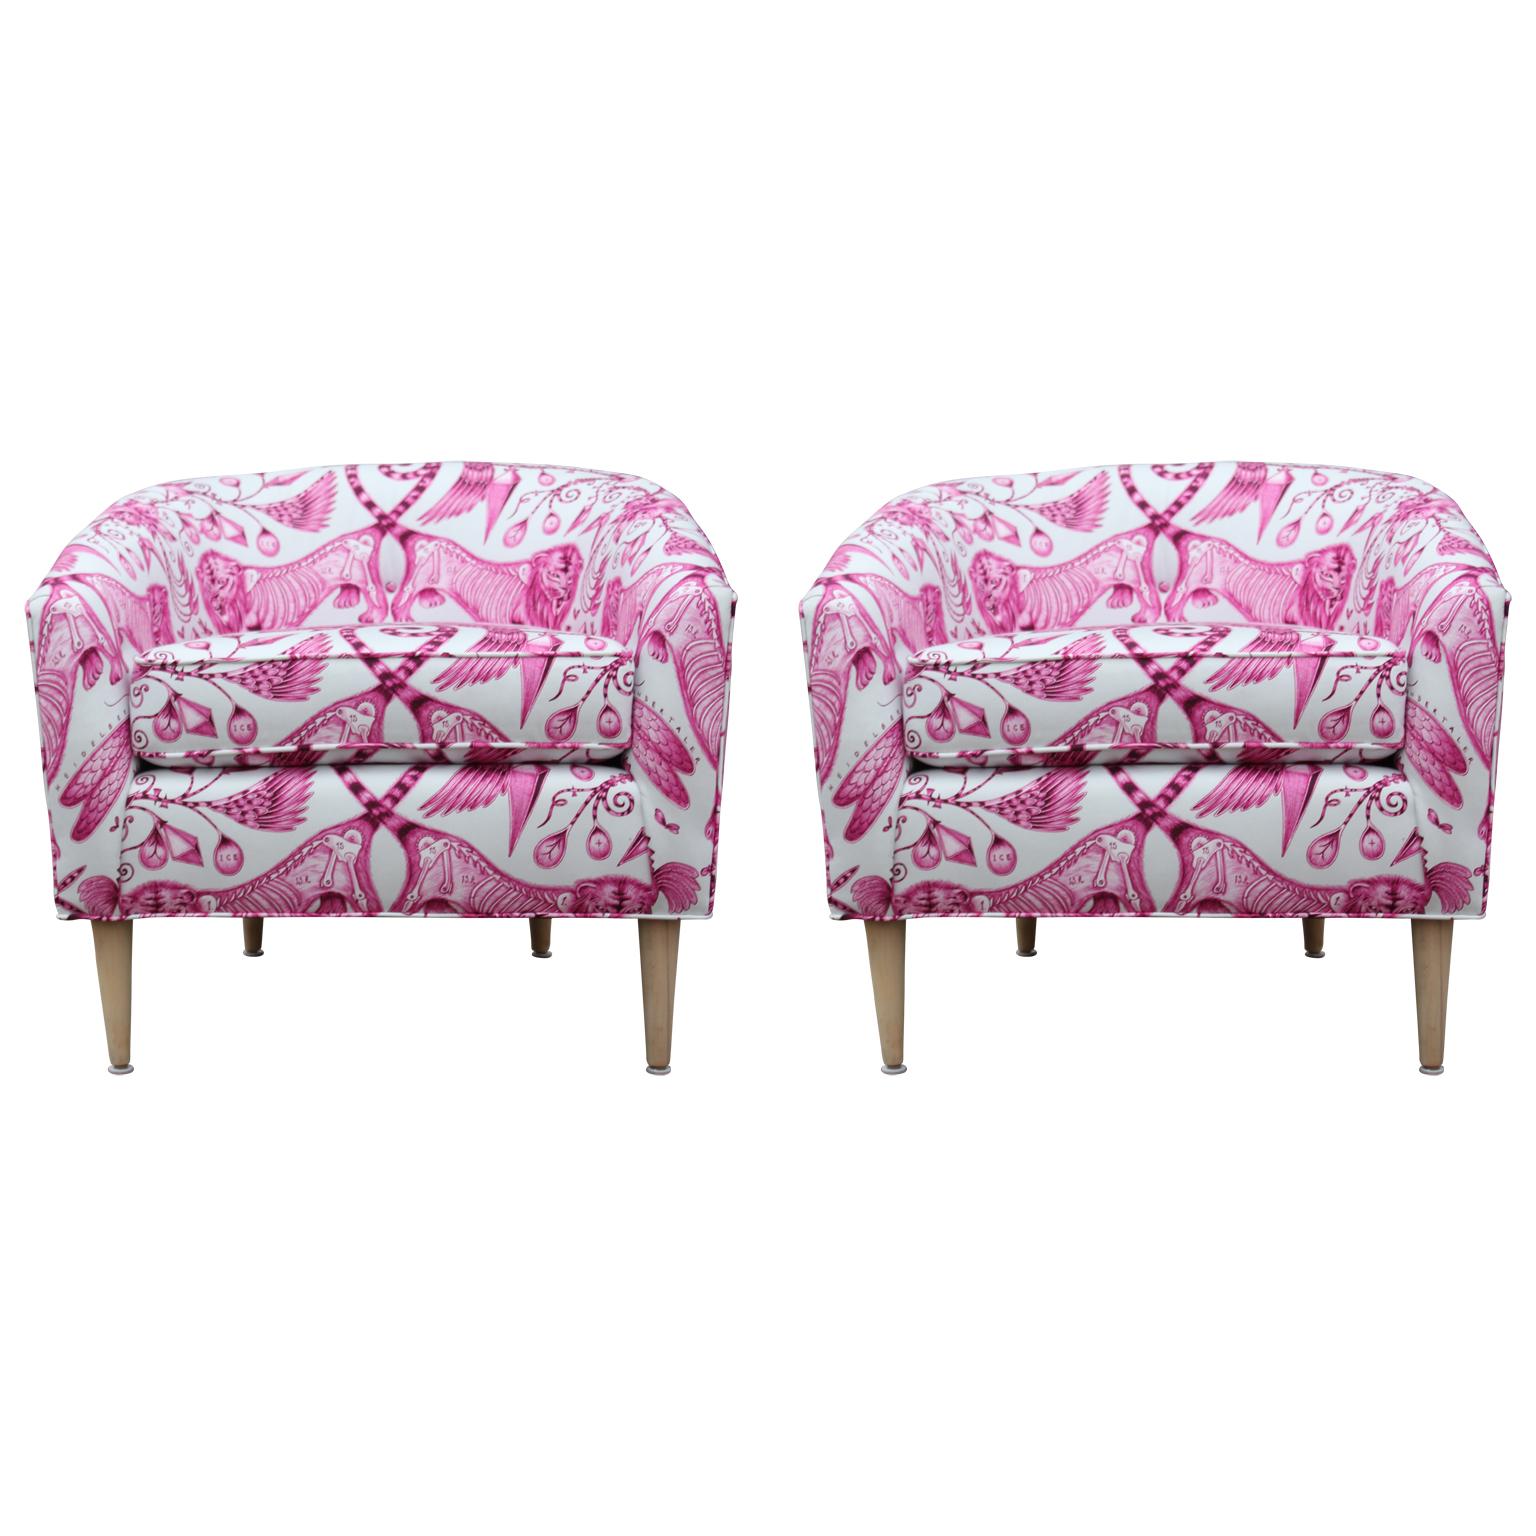 Stunning Pair of Custom Pink/White Barrel Back Lounge Chairs